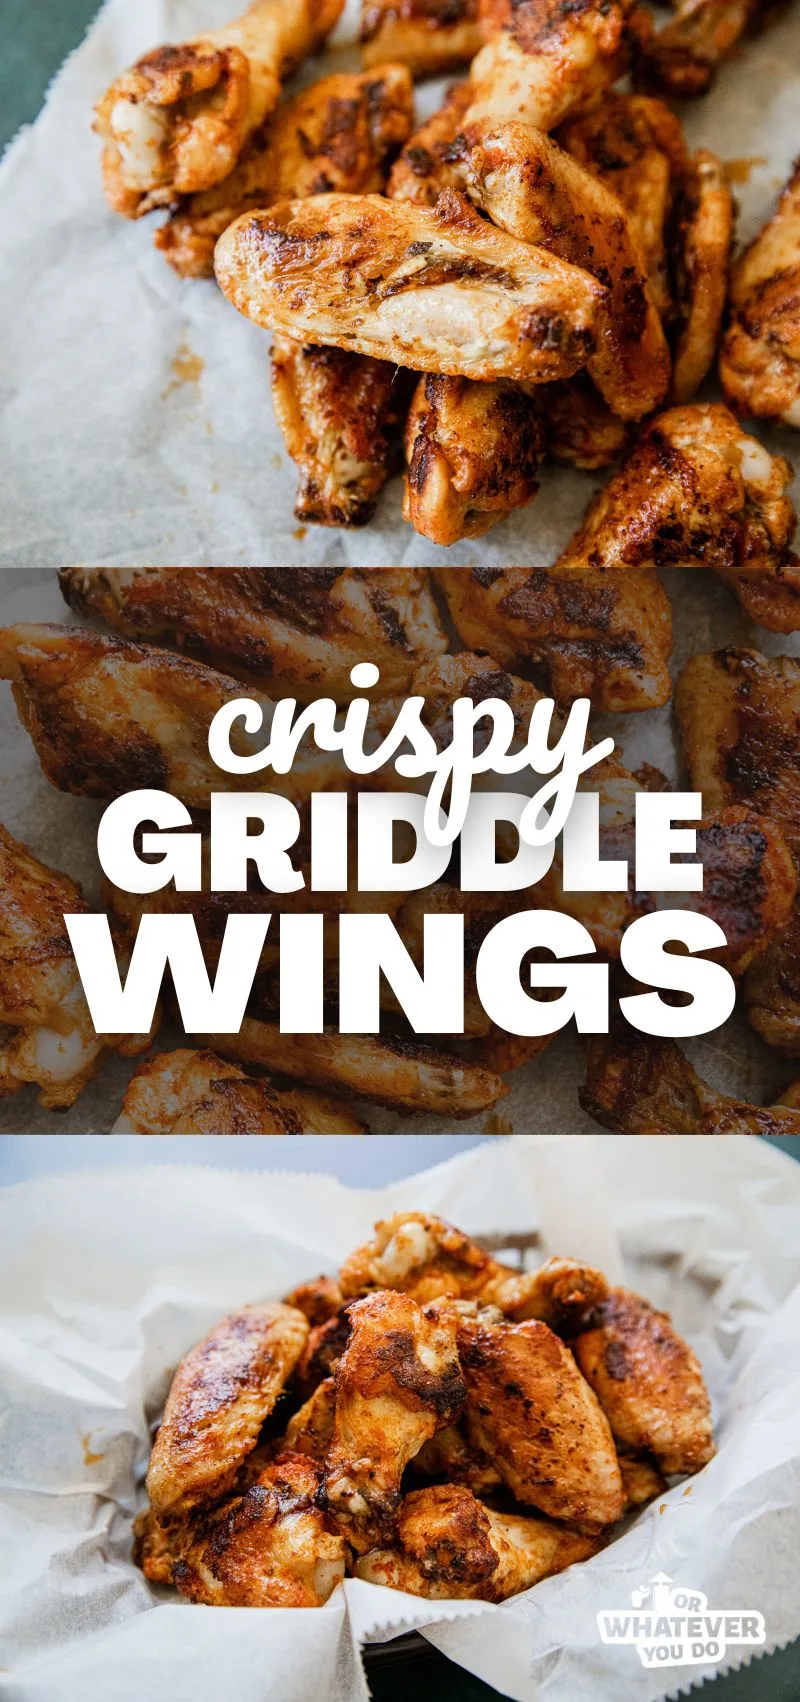 Crispy Griddle Wings